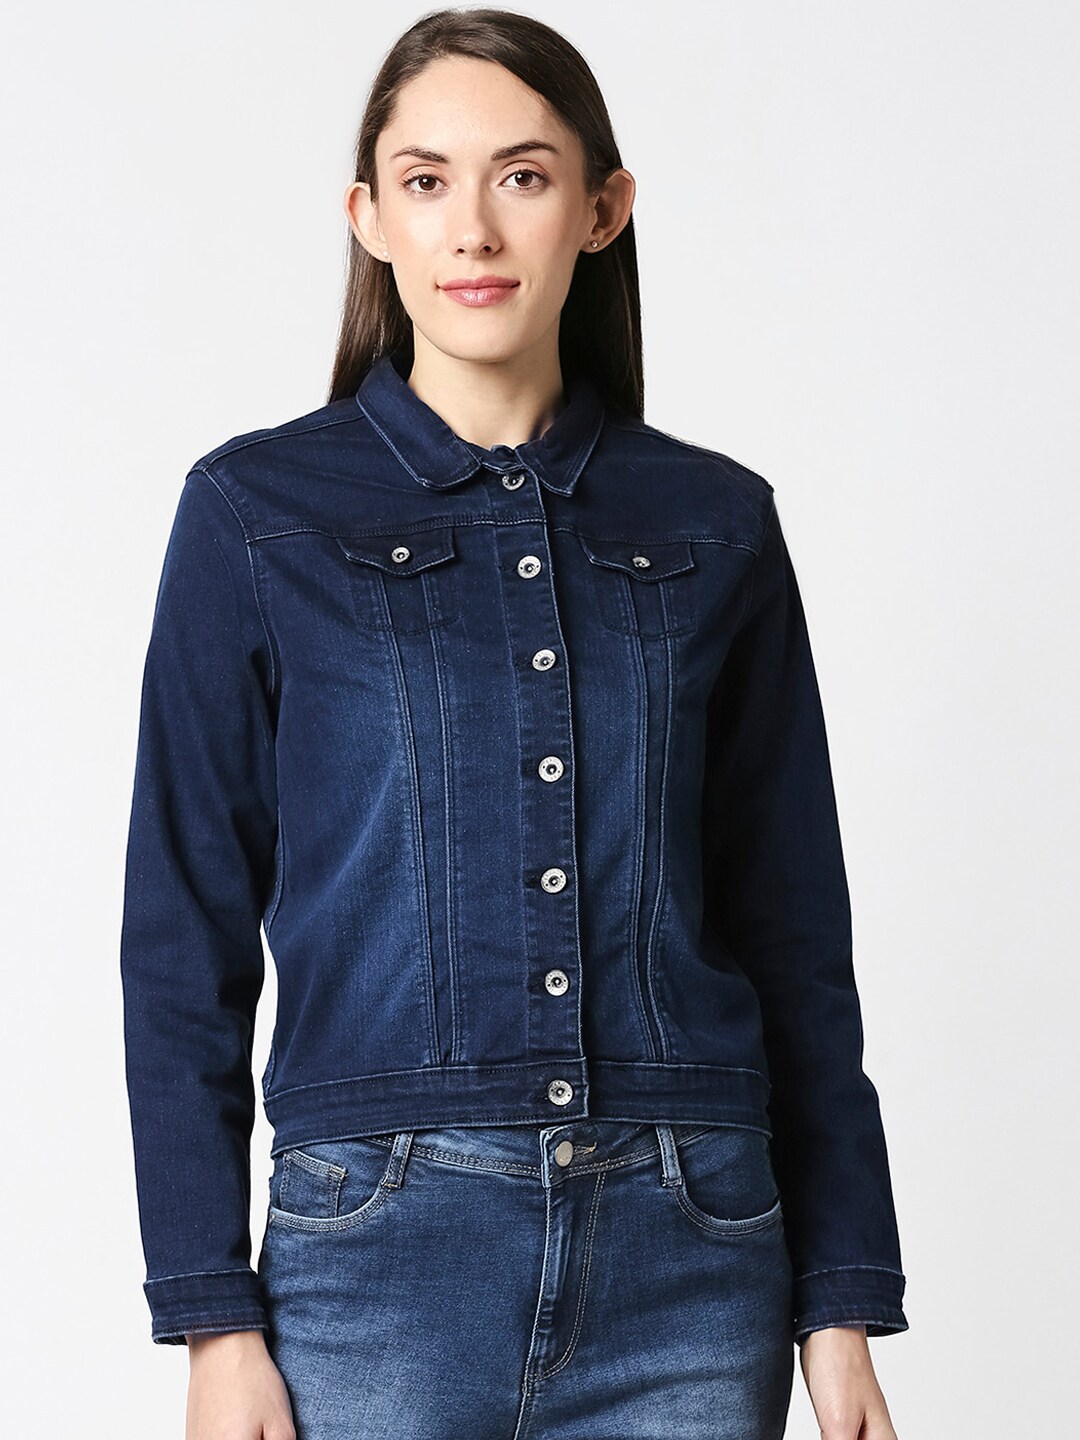 Kraus Jeans Women Blue Washed Denim Jacket Price in India